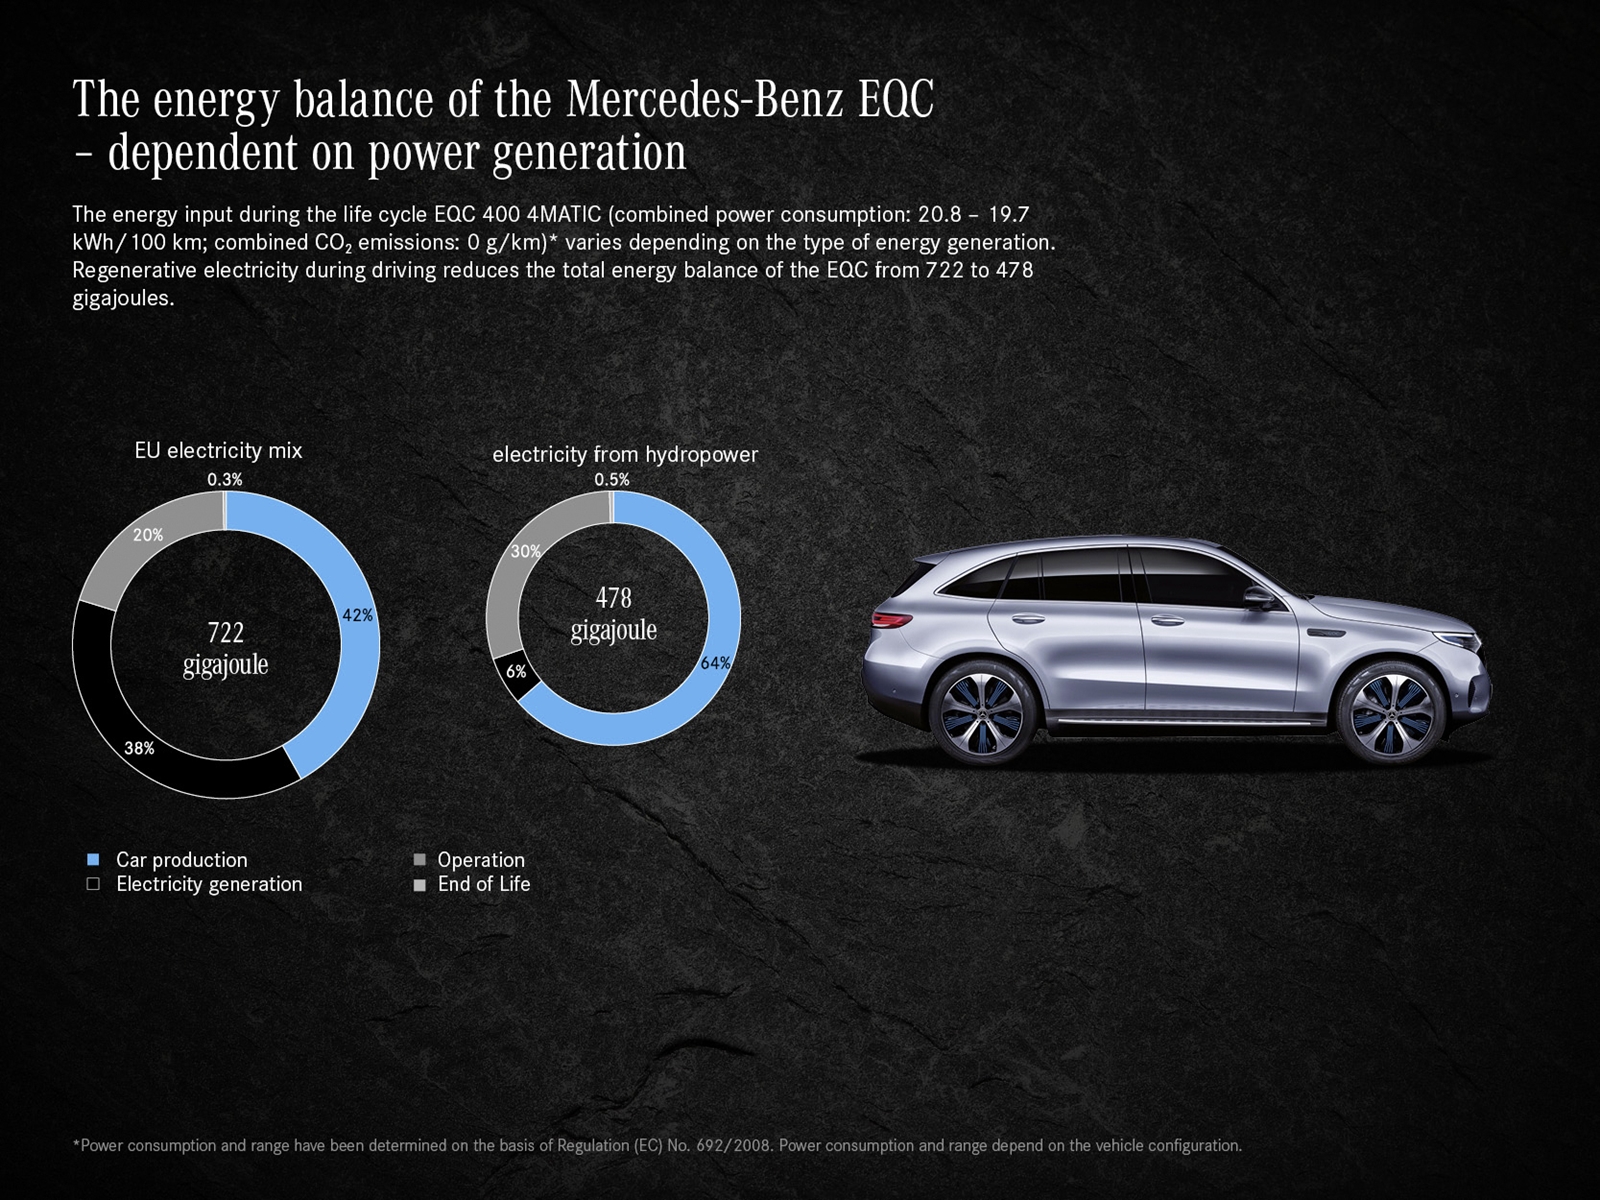 Die Umweltbilanz Des Eqc 400 4matic: So Nachhaltig Ist Der Mercedes Benz Eqc The Eco Balance Of The Eqc 400 4matic